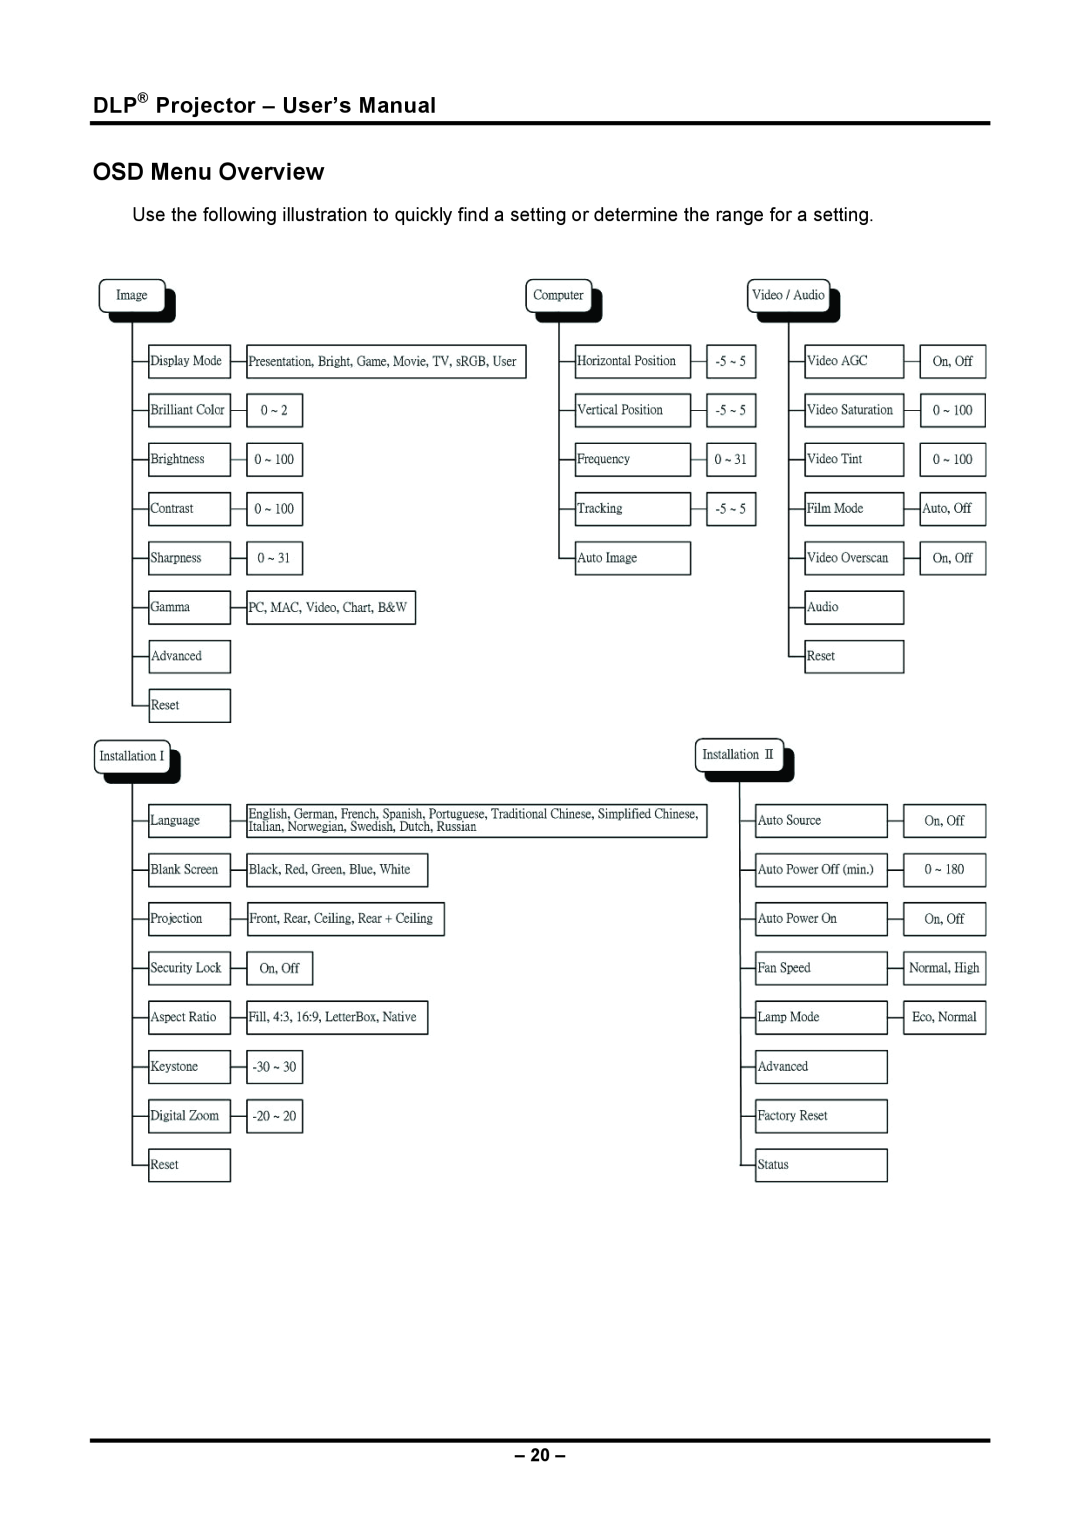 Planar PR5030 manual OSD Menu Overview, DLP Projector - User’s Manual 